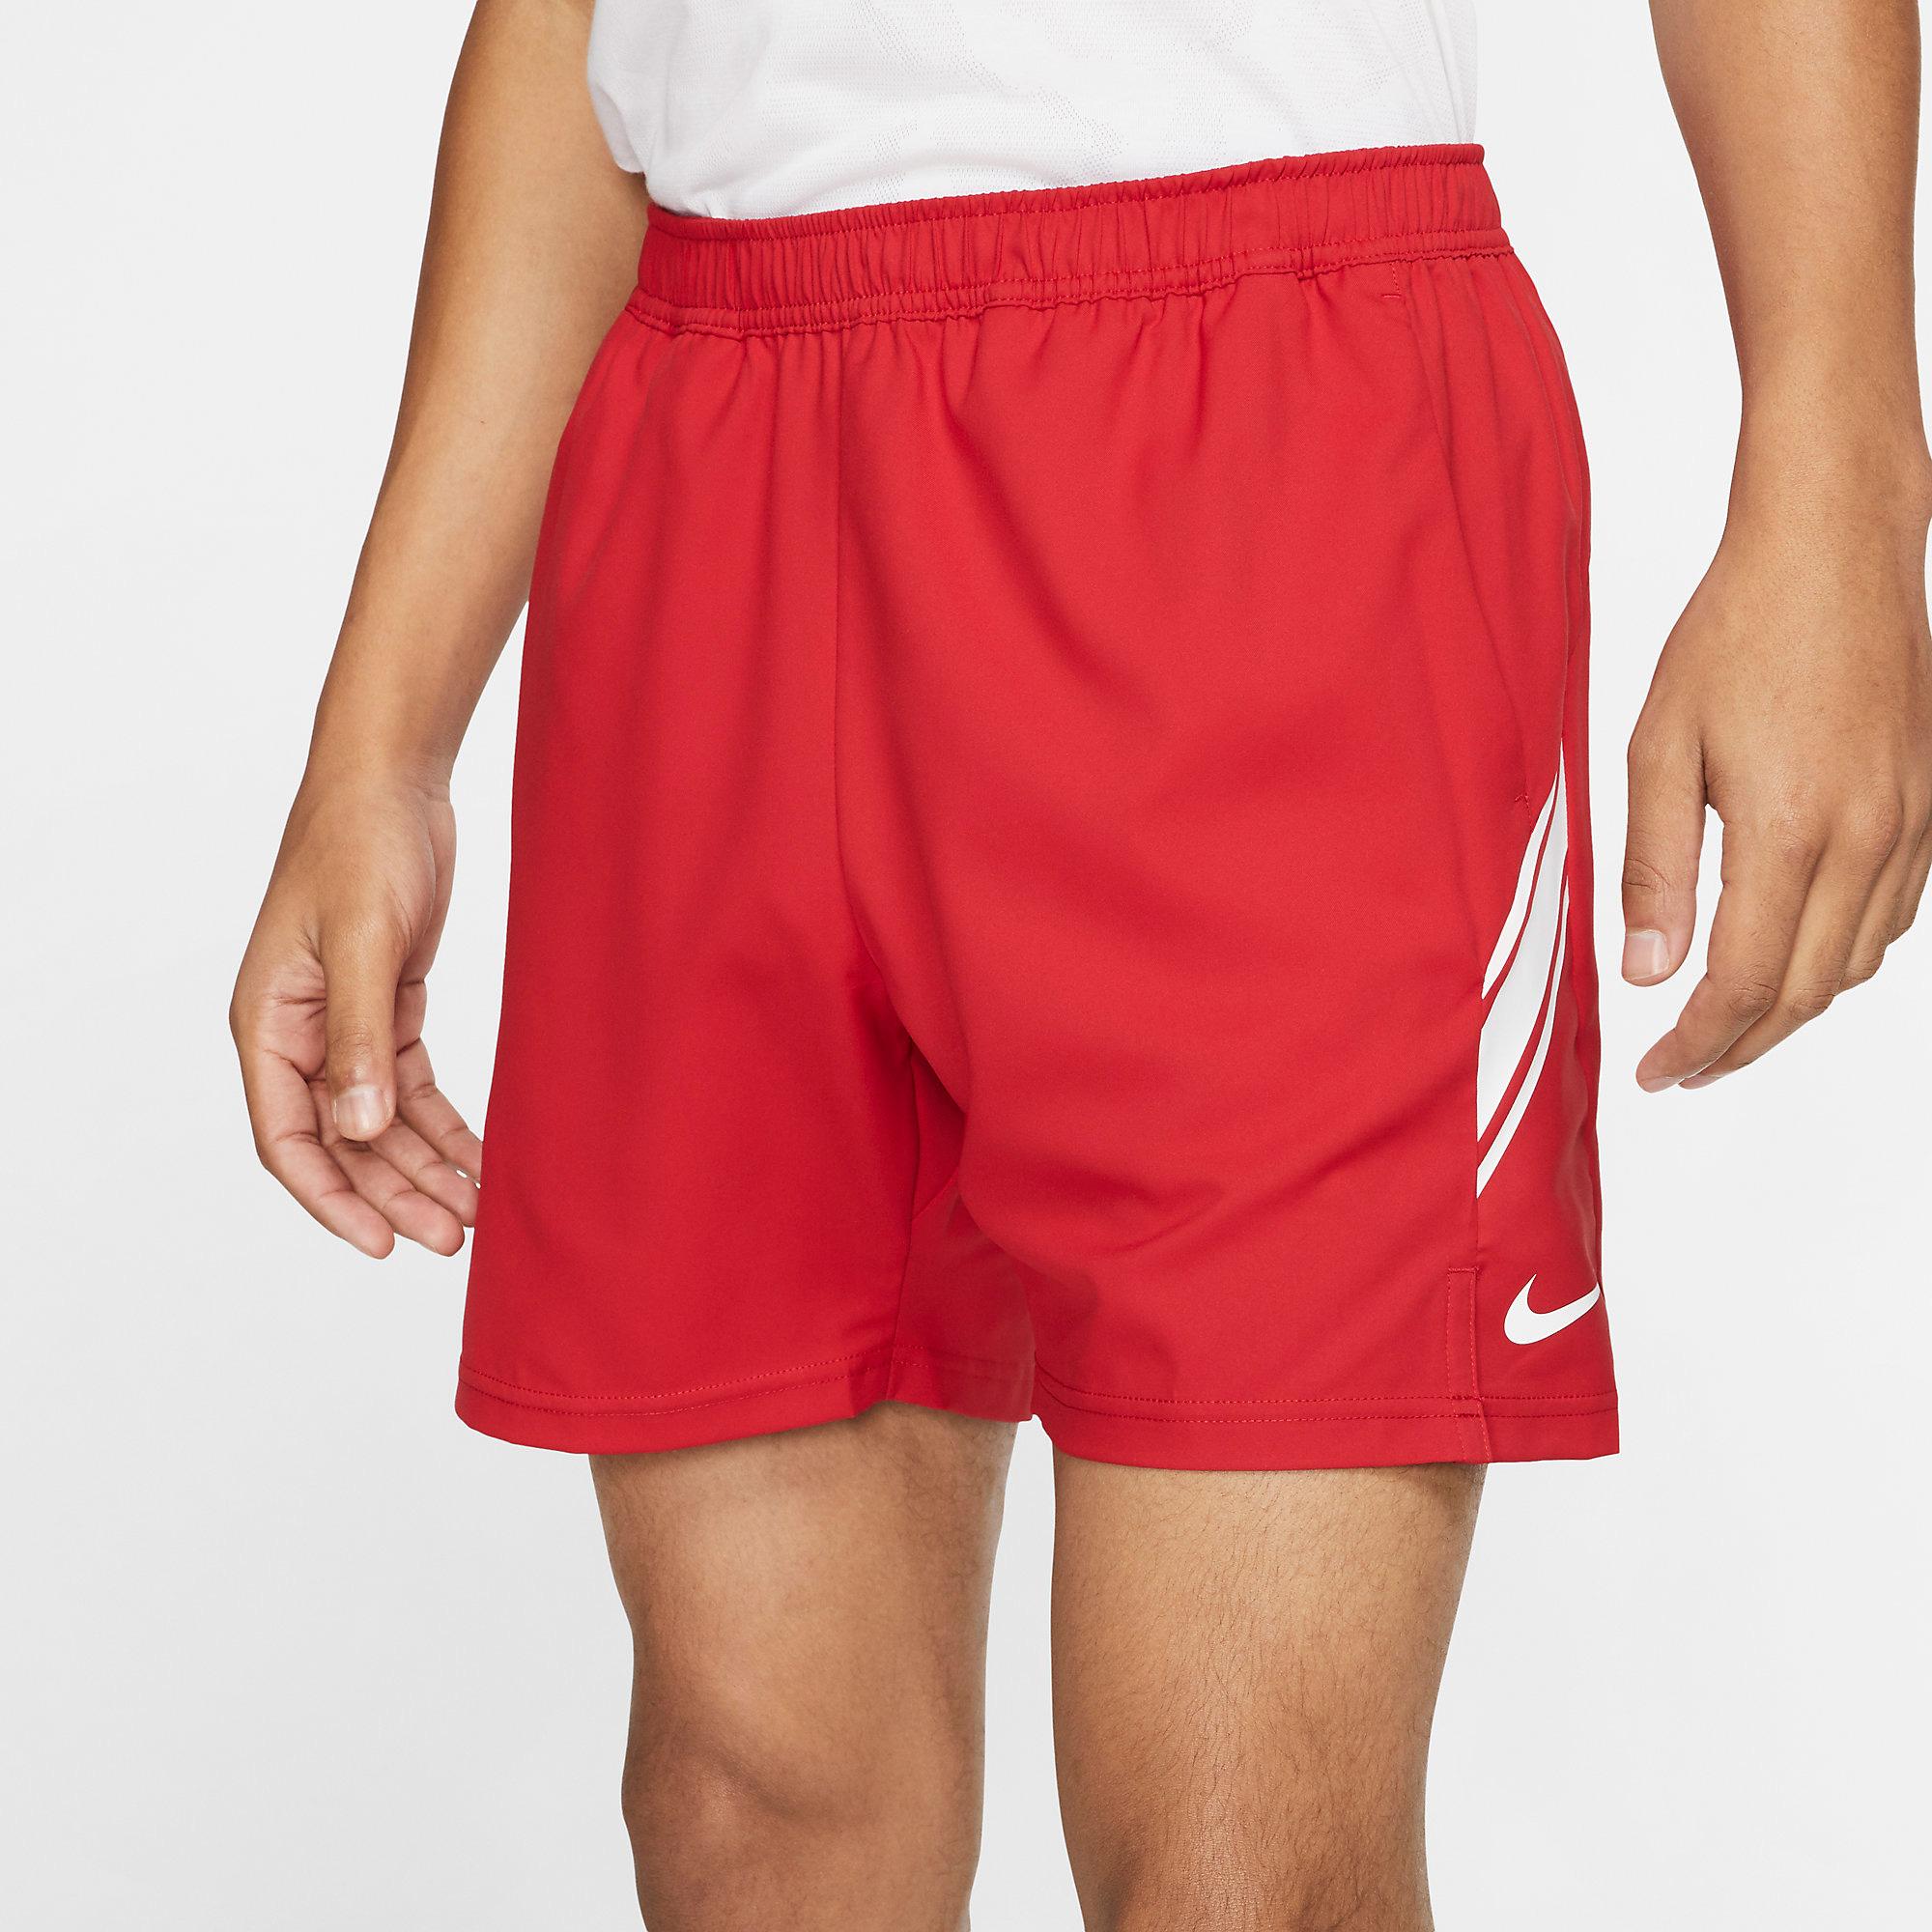 red dri fit shorts